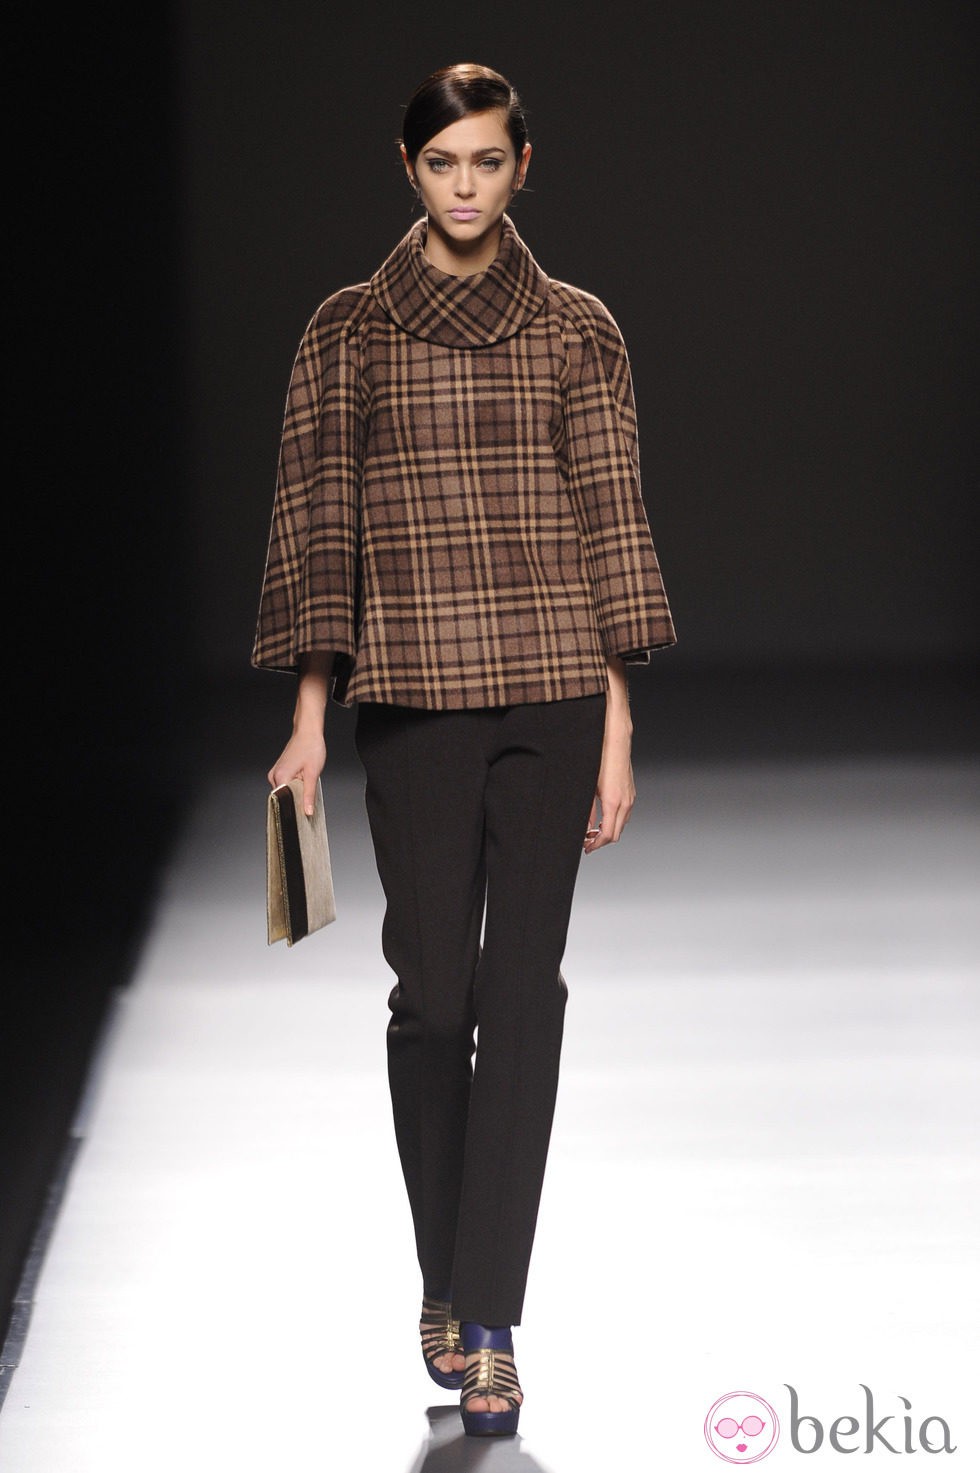 Capa con tartán de Devota & Lomba en Madrid Fashion Week otoño/invierno 2014/2015